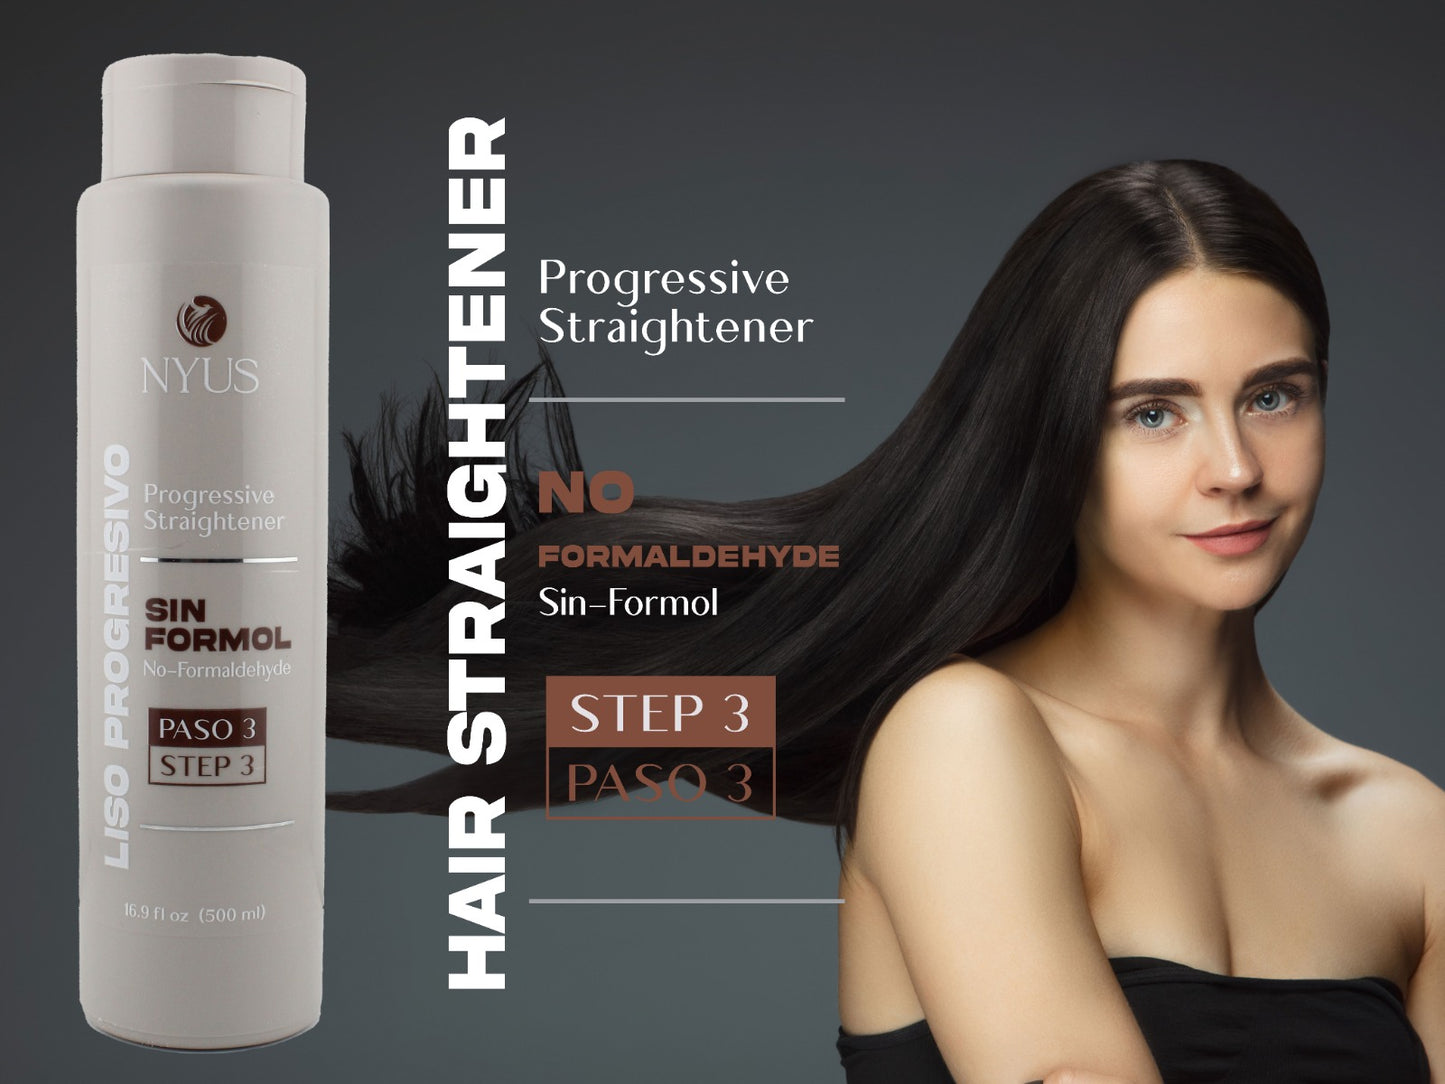 Hair Straightener / Step 3